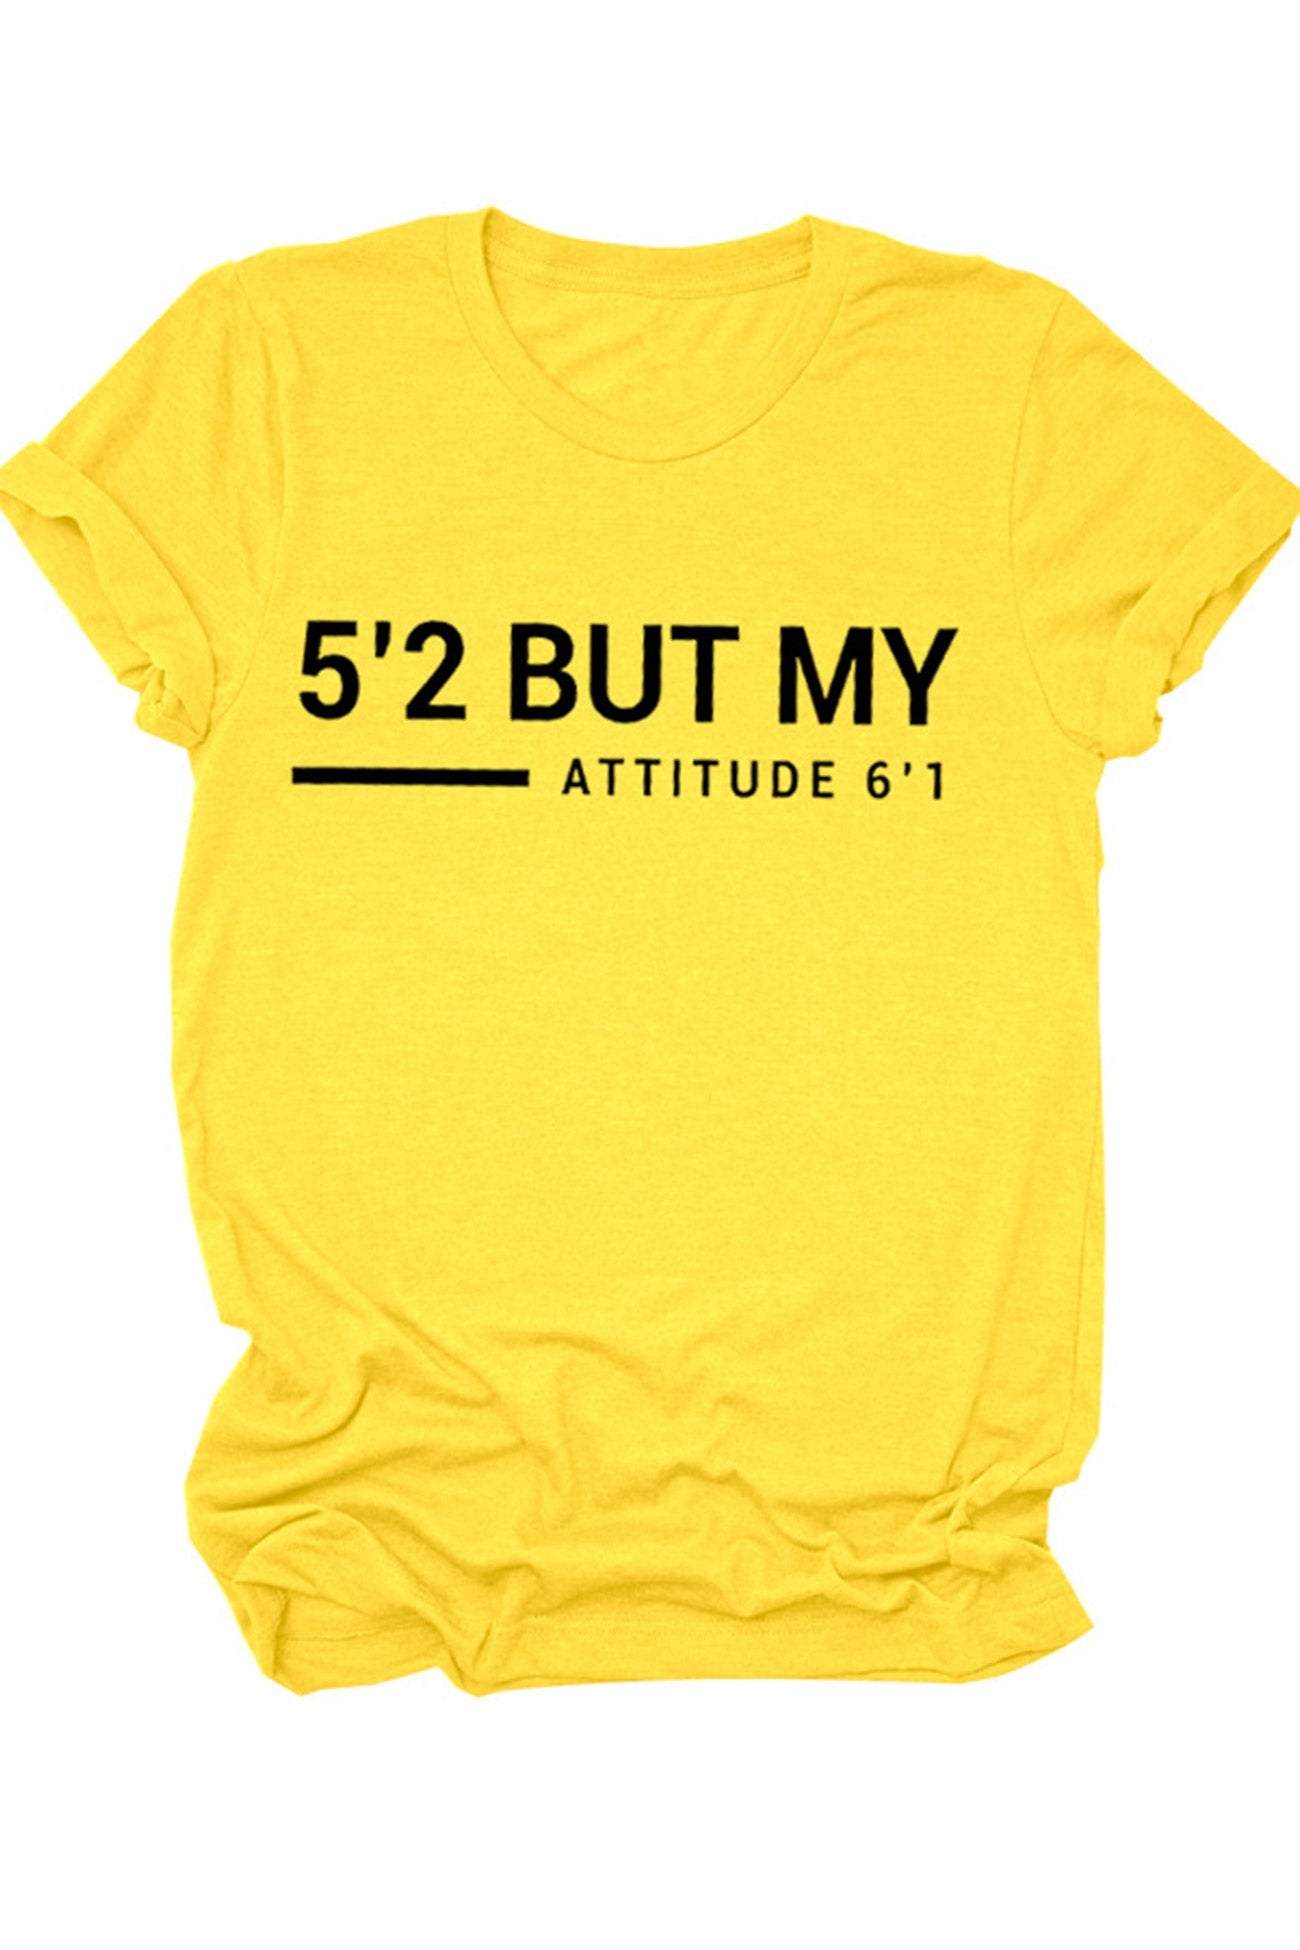 5'2 But My Attitude 6'1 Printed Shirt